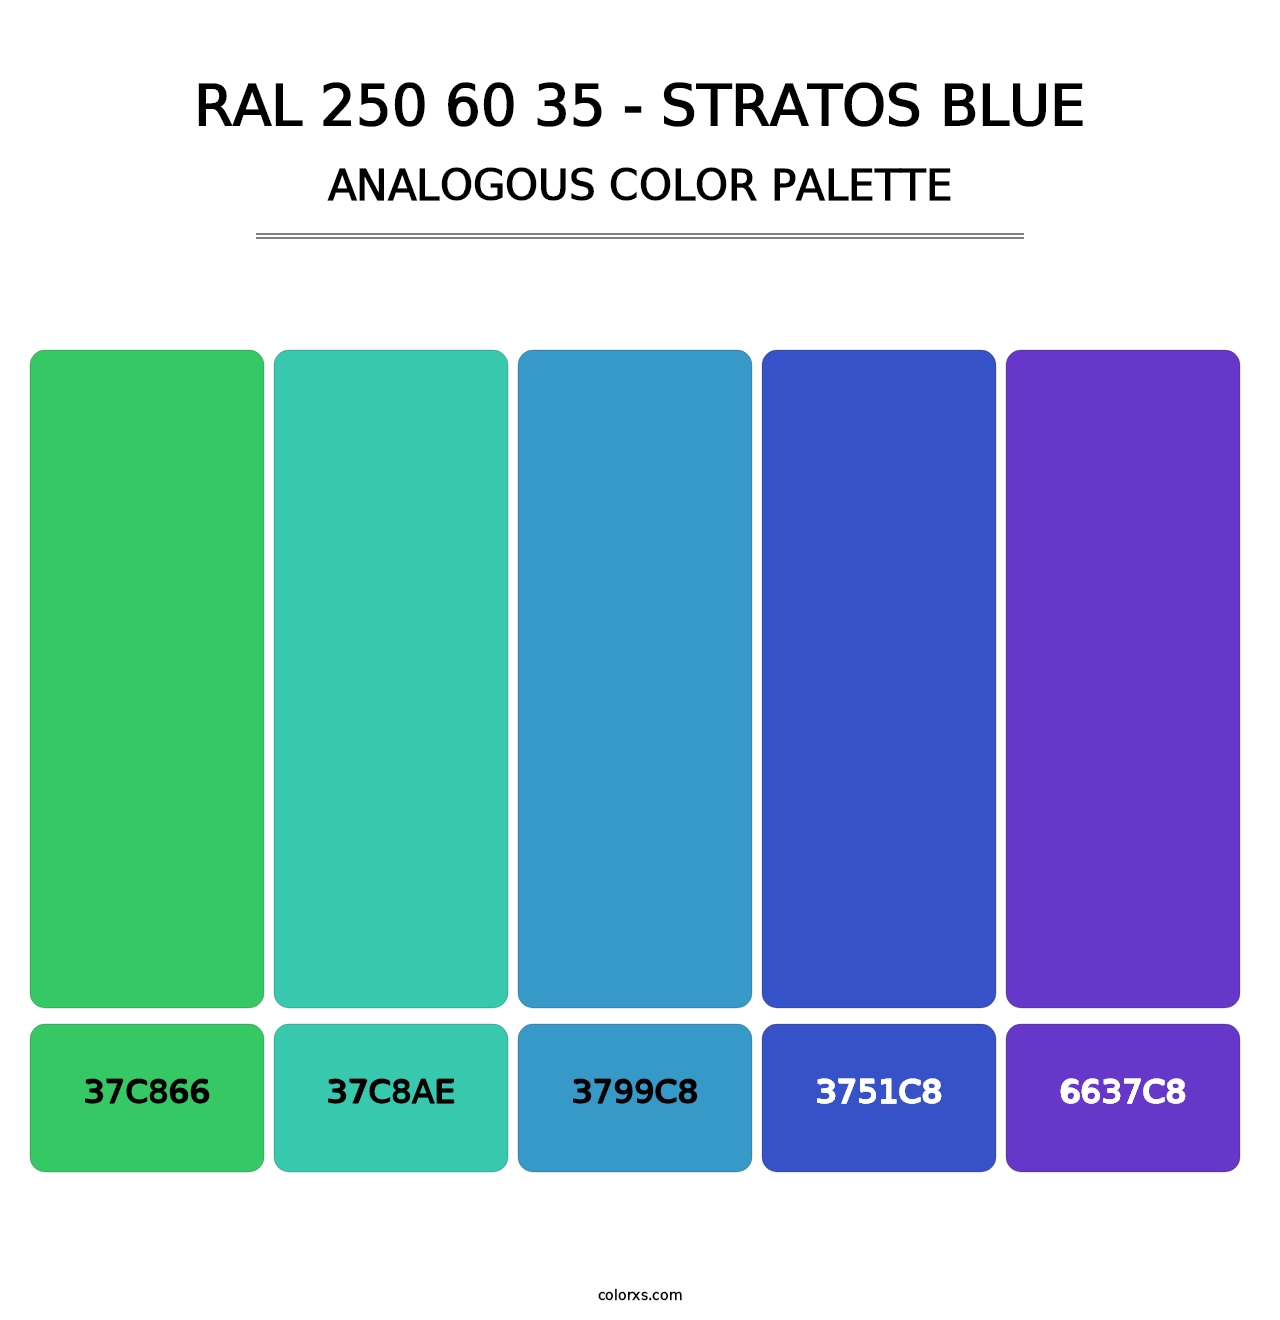 RAL 250 60 35 - Stratos Blue - Analogous Color Palette